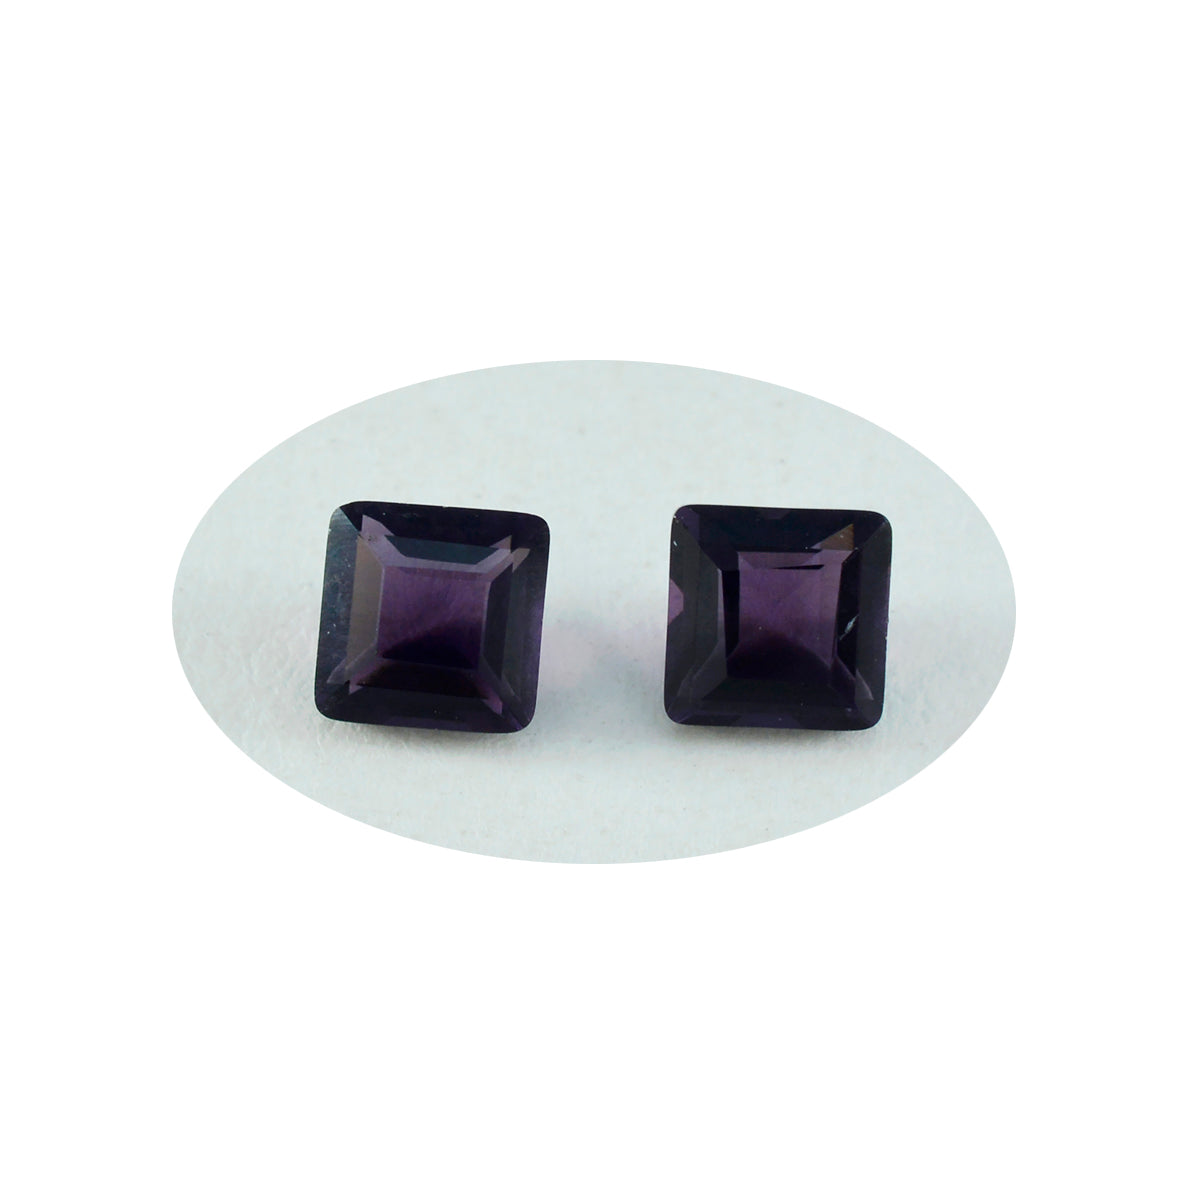 Riyogems 1PC Purple Amethyst CZ Faceted 11x11 mm Square Shape cute Quality Loose Stone